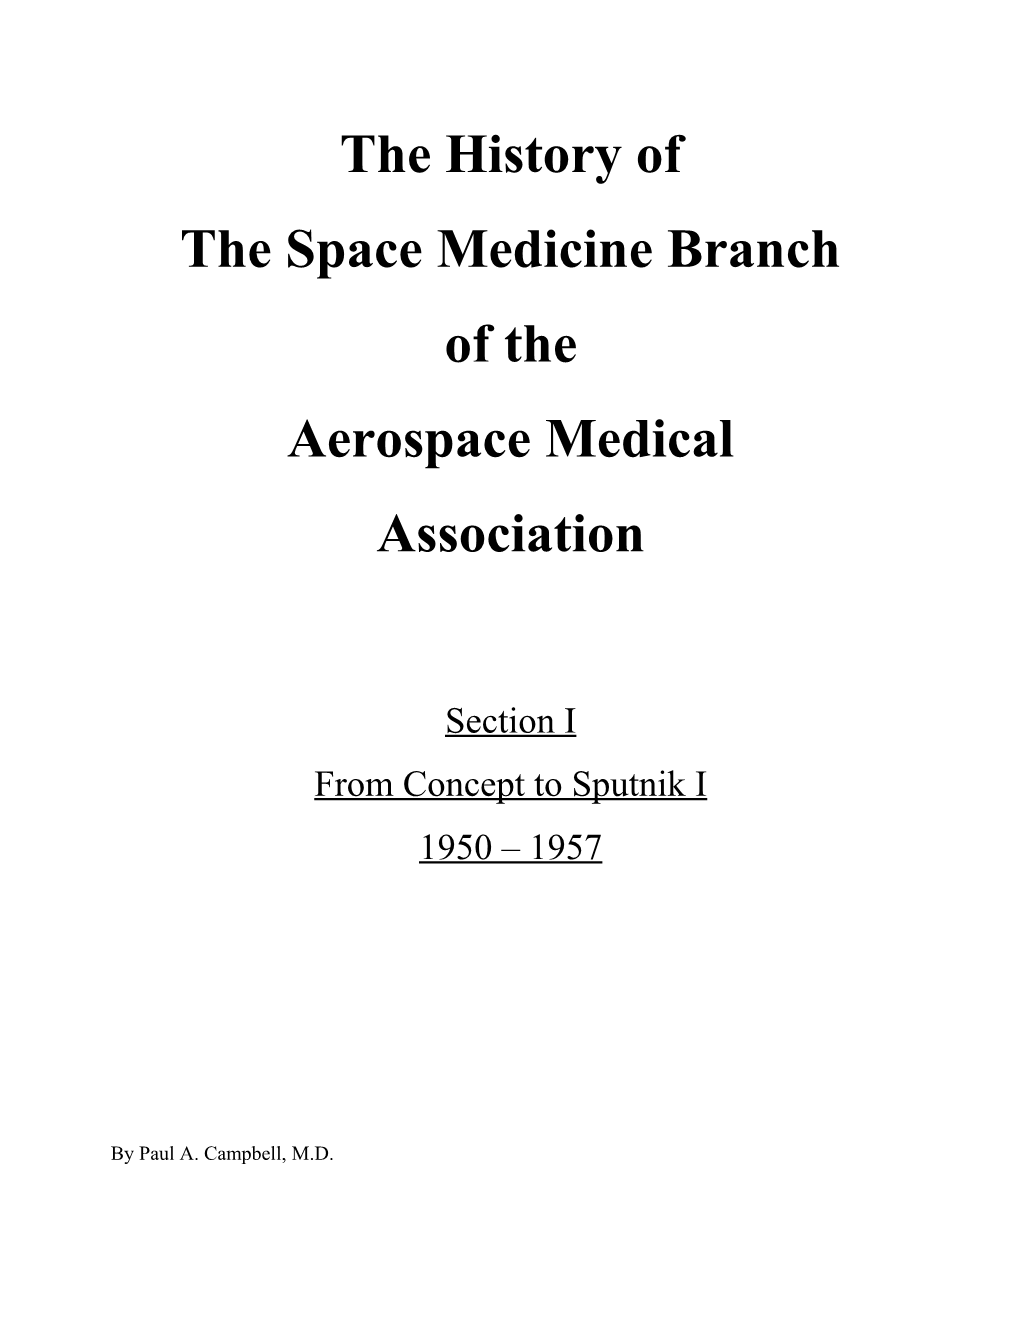 The Historv of the Space Medicine Branch